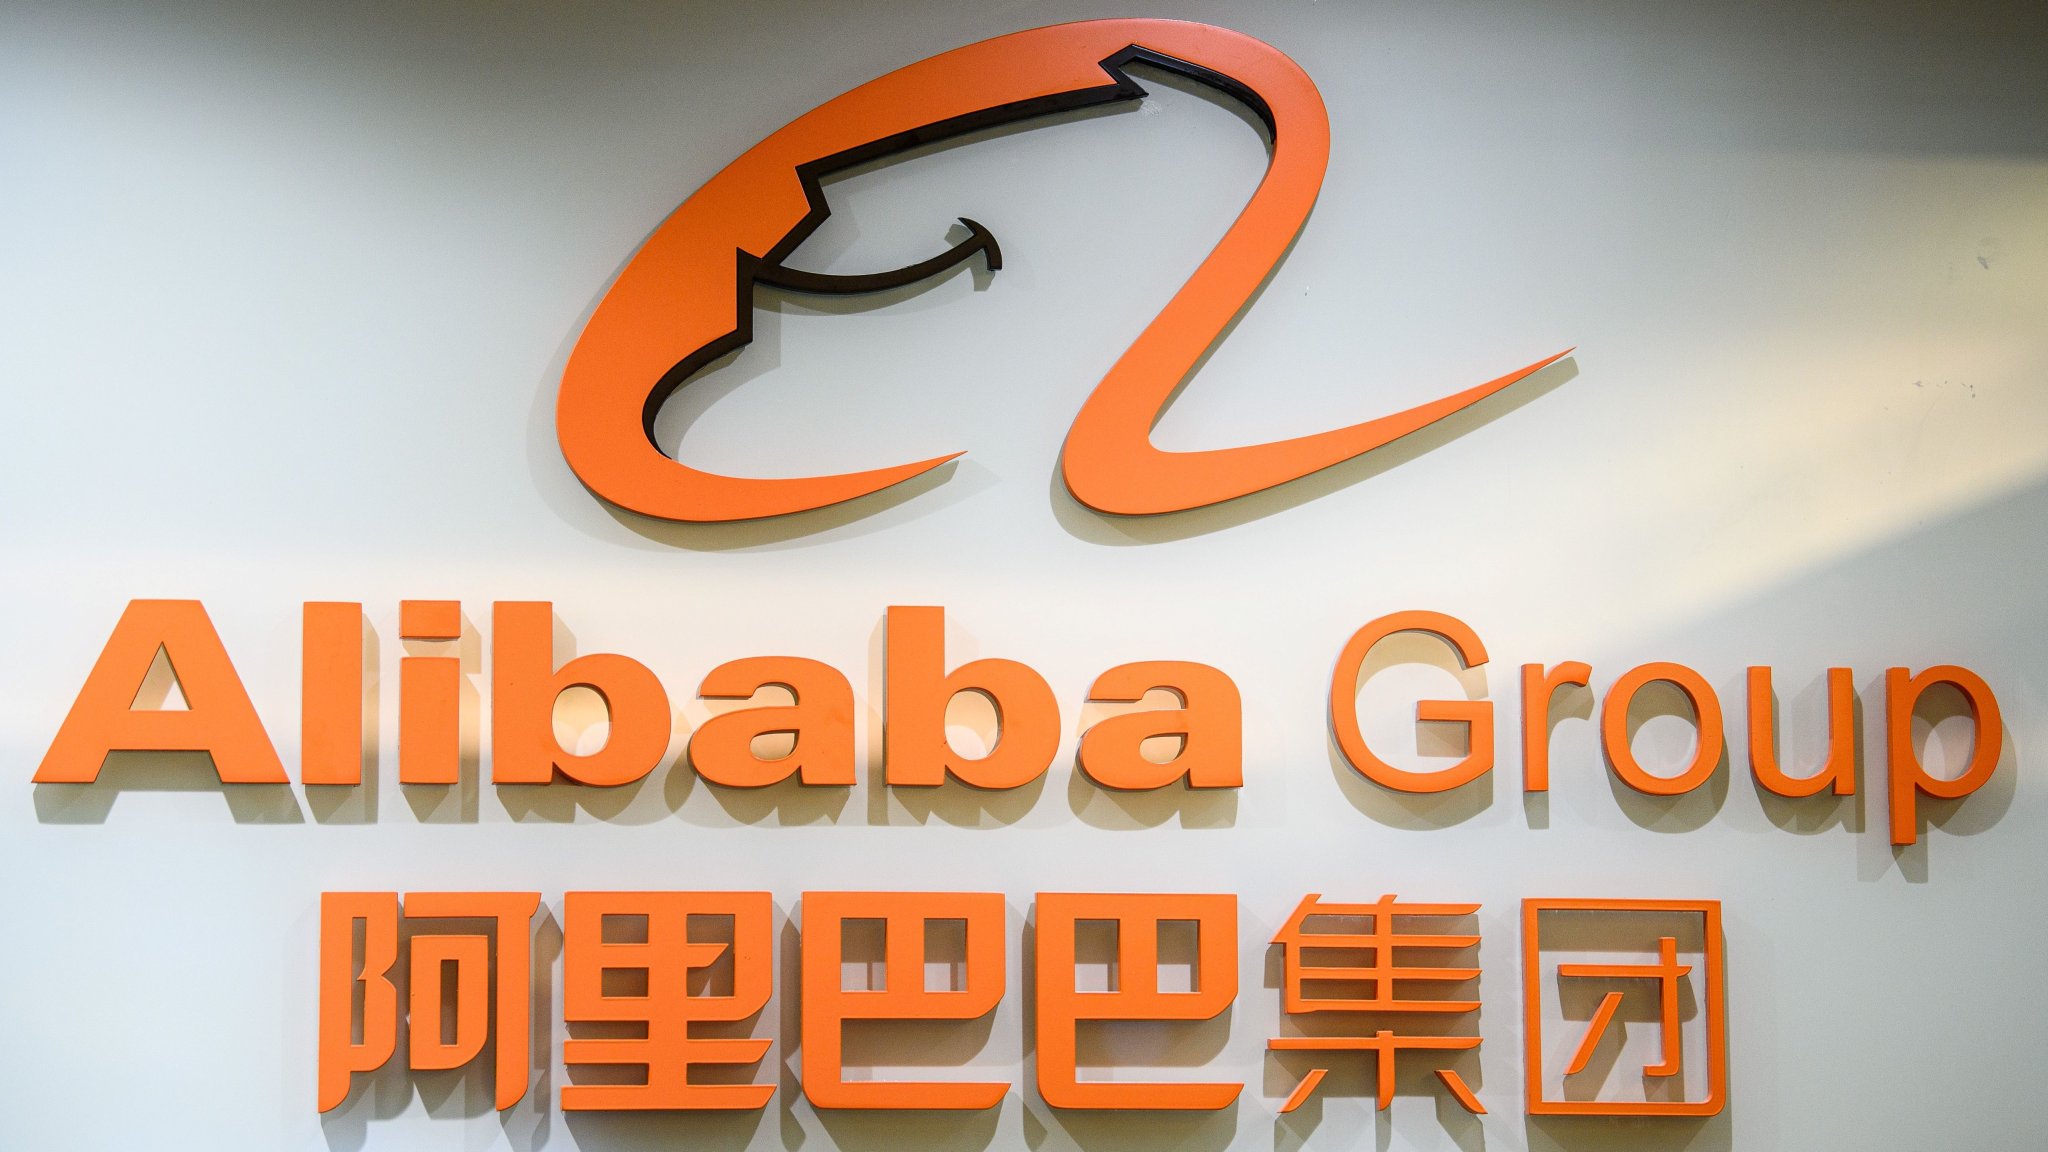 China Fines Alibaba $2.8 Billion For Breaking Anti-Monopoly Law